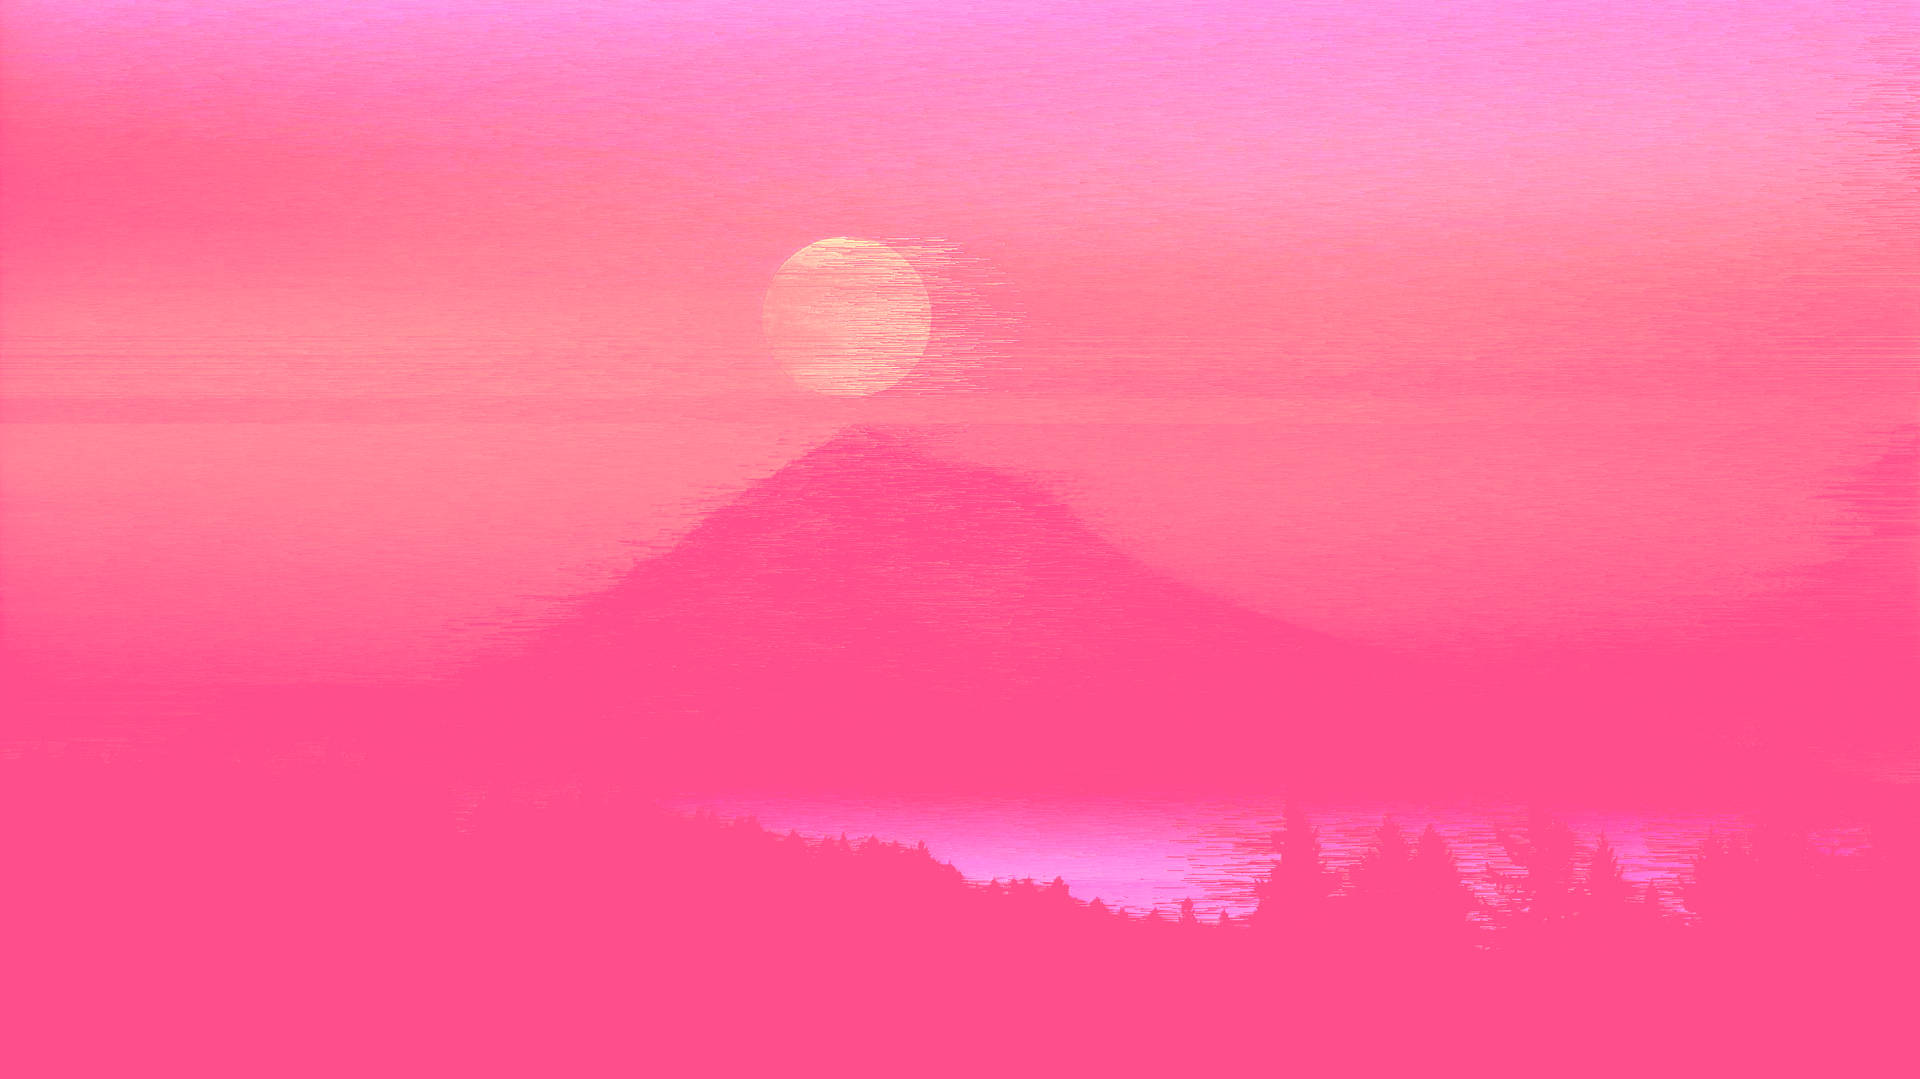 Pink Sunset Mountain View Wallpaper